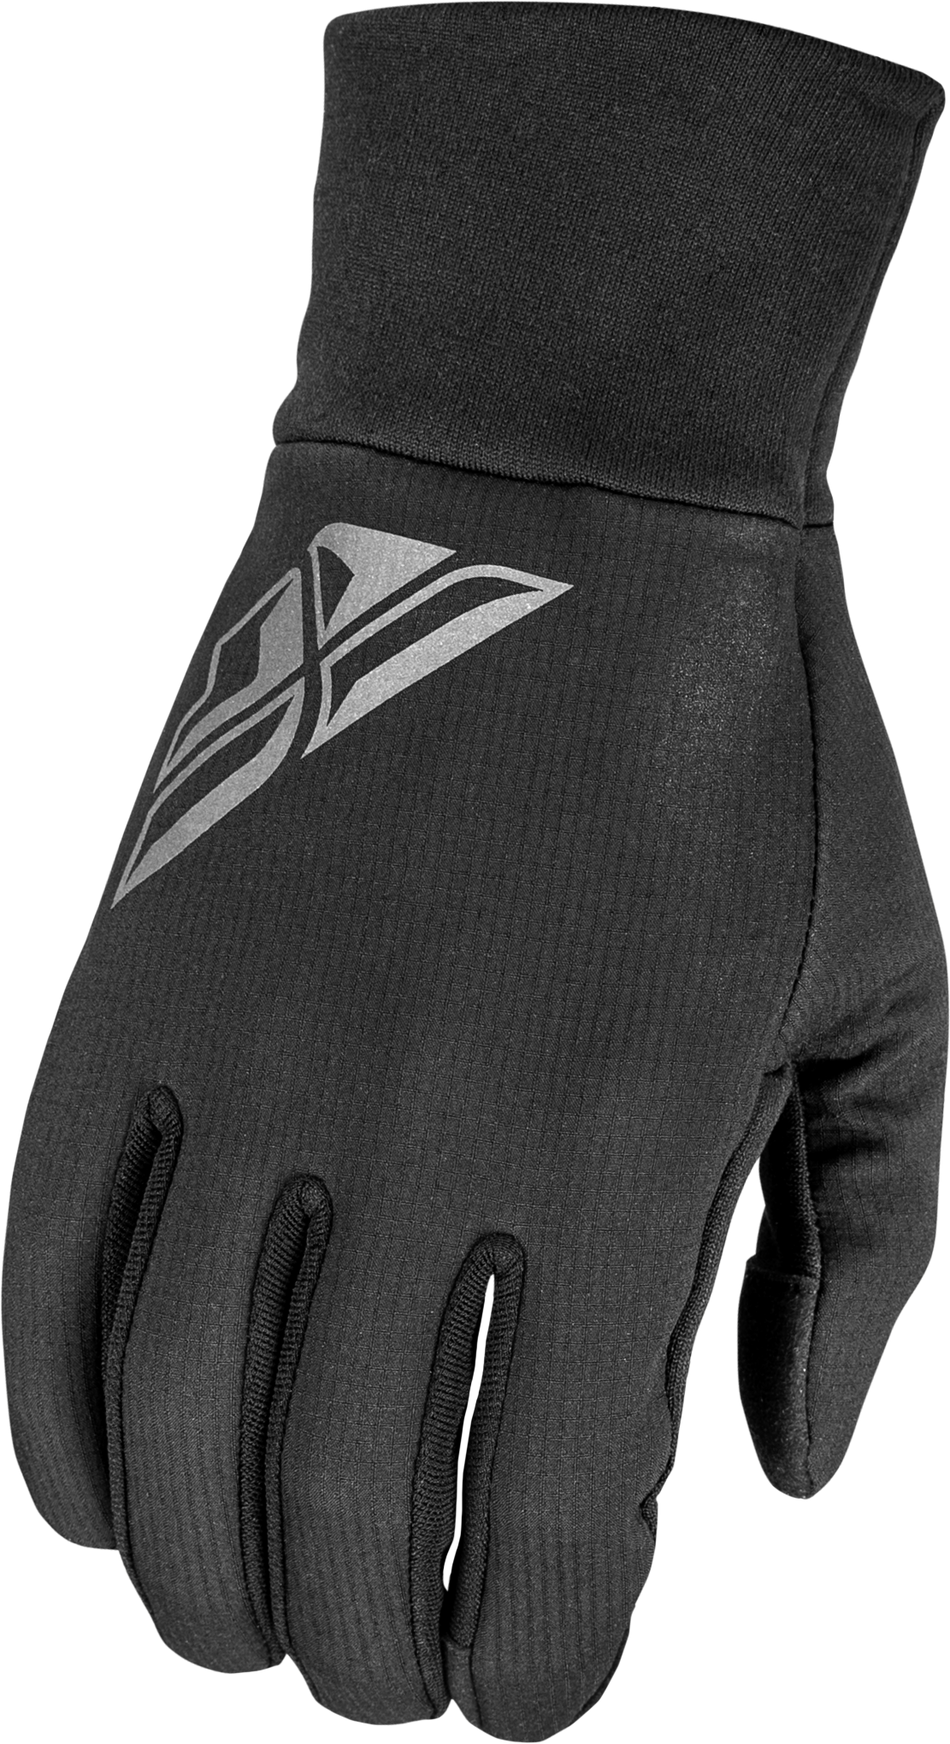 FLY RACING Glove Liners Black 2x 363-39602X